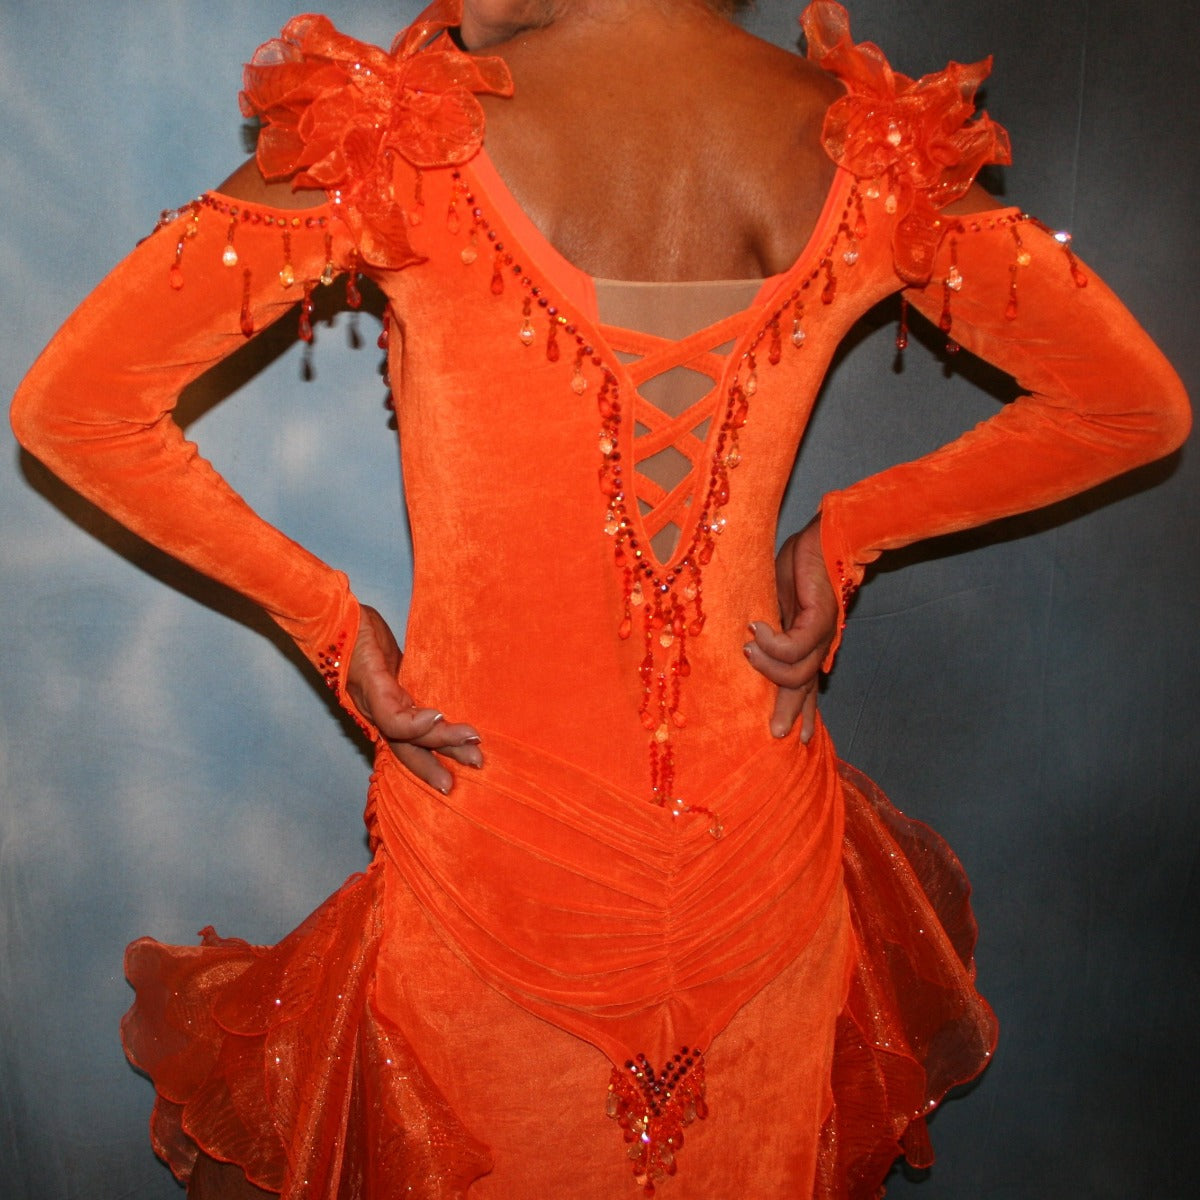 Crystal's Creations close up back view of Orange Latin/rhythm dress was created in luxurious solid slinky with orange glitter organza flounces, embellished with orange Swarovski stonework & hand beading.